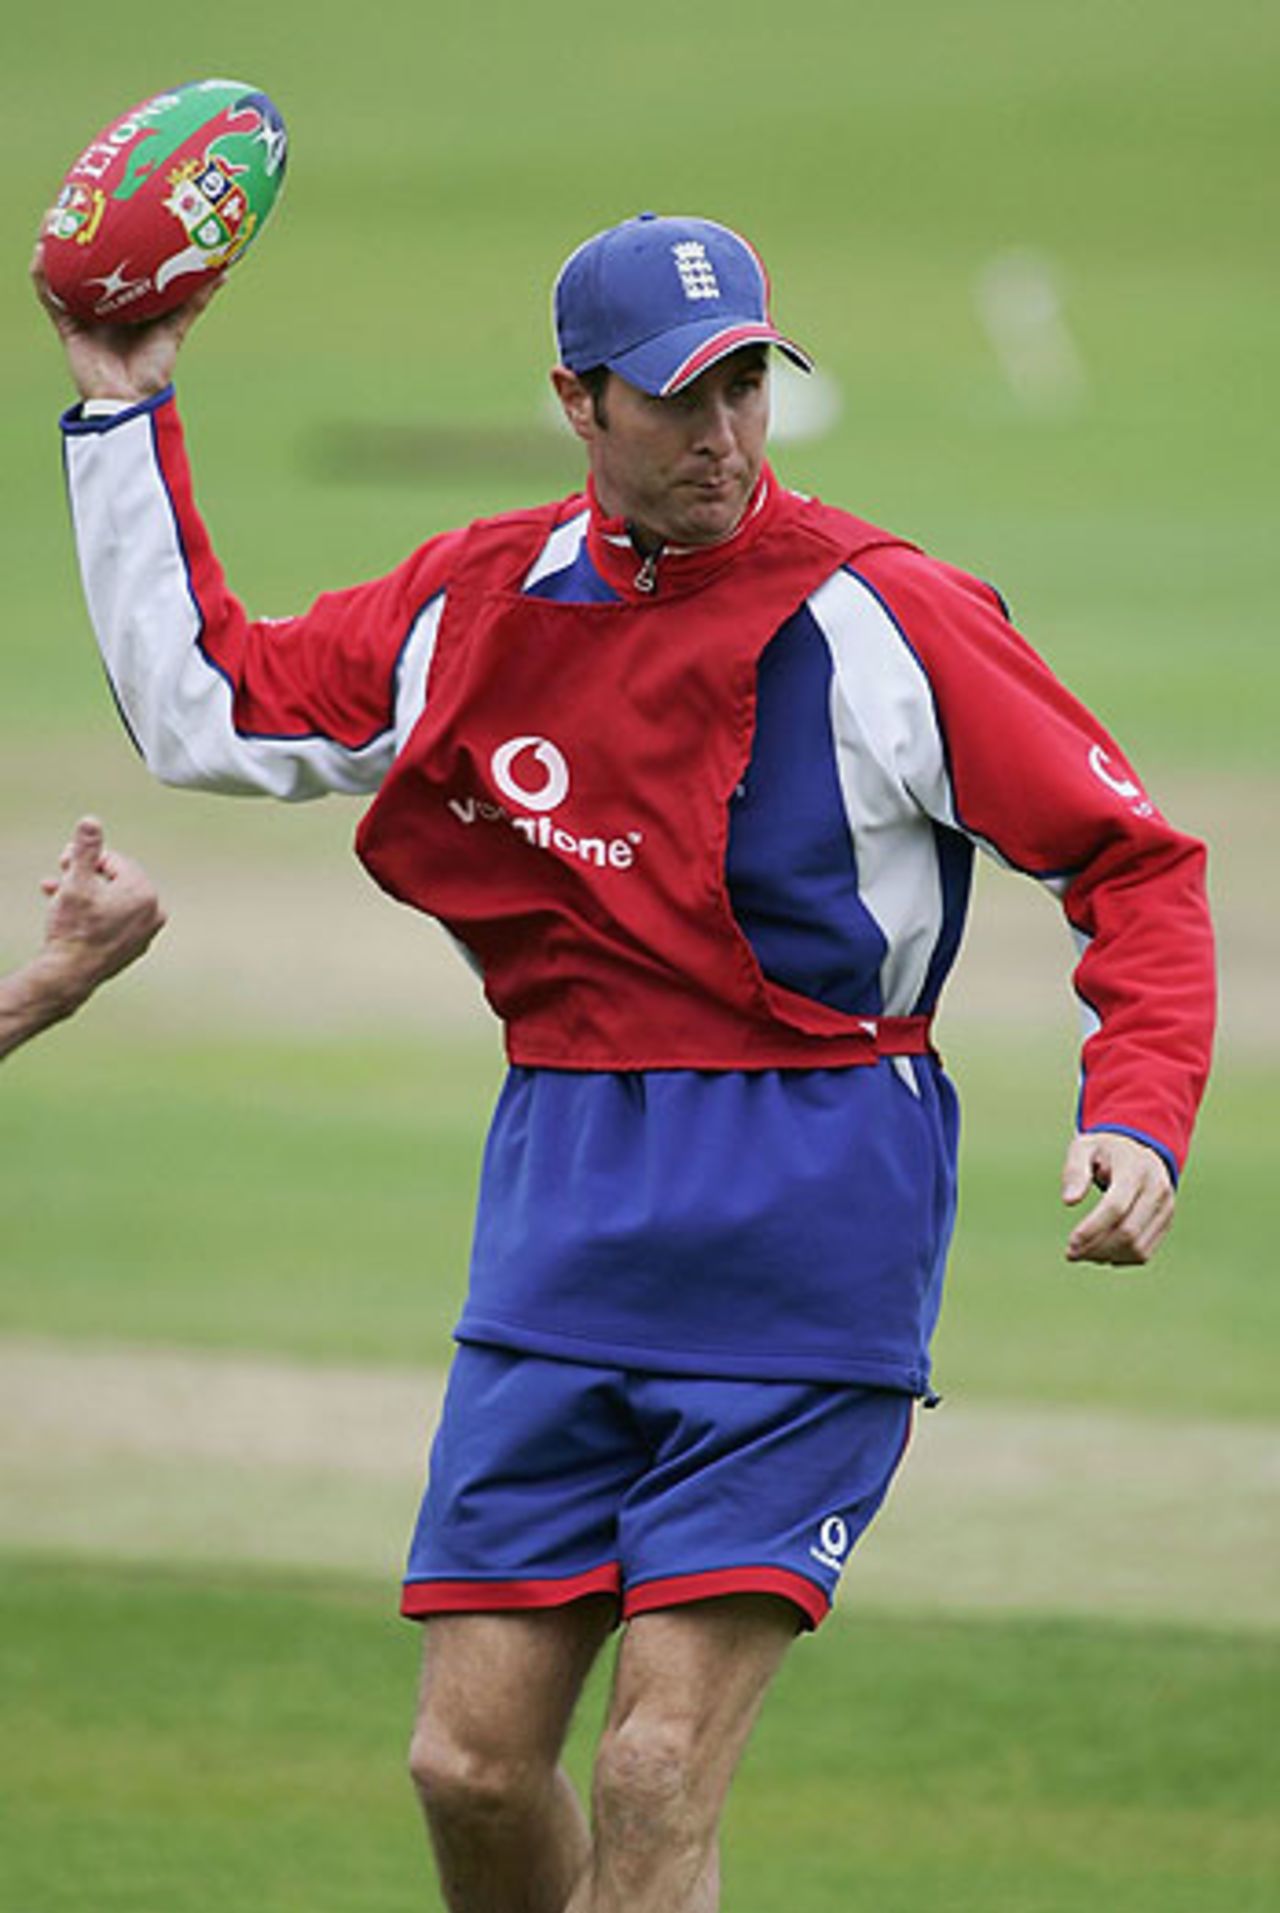 Michael Vaughan, who will bat at No. 3 during the Bangladesh Tests, warms up during a training session at Lord's, May 25, 2005